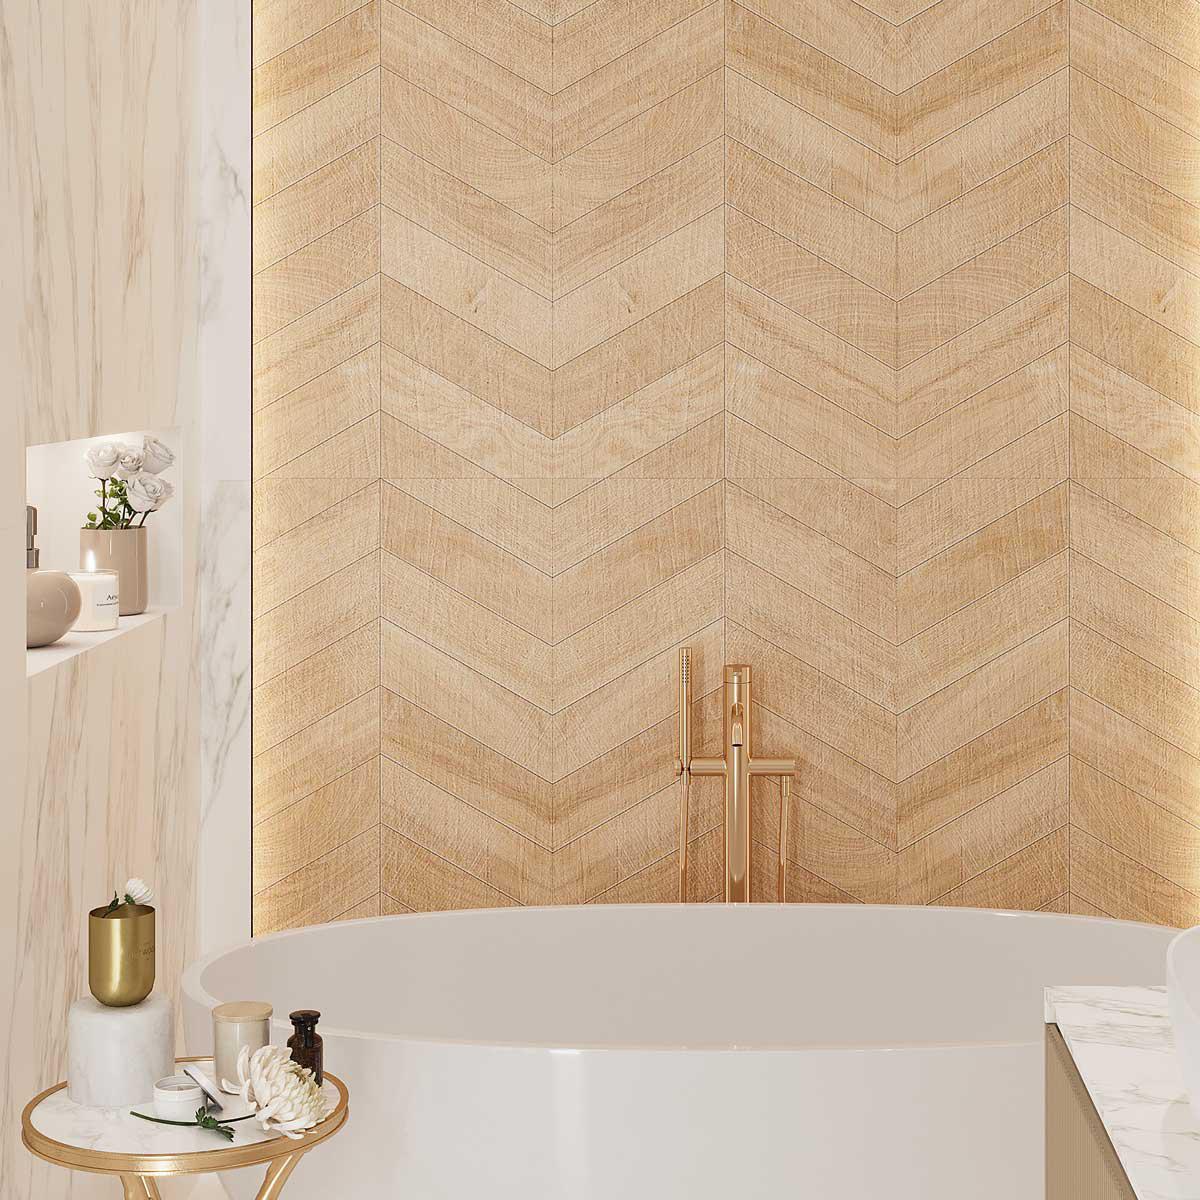 Maple chevron wood-look porcelain tile wall behind a standing bathtub